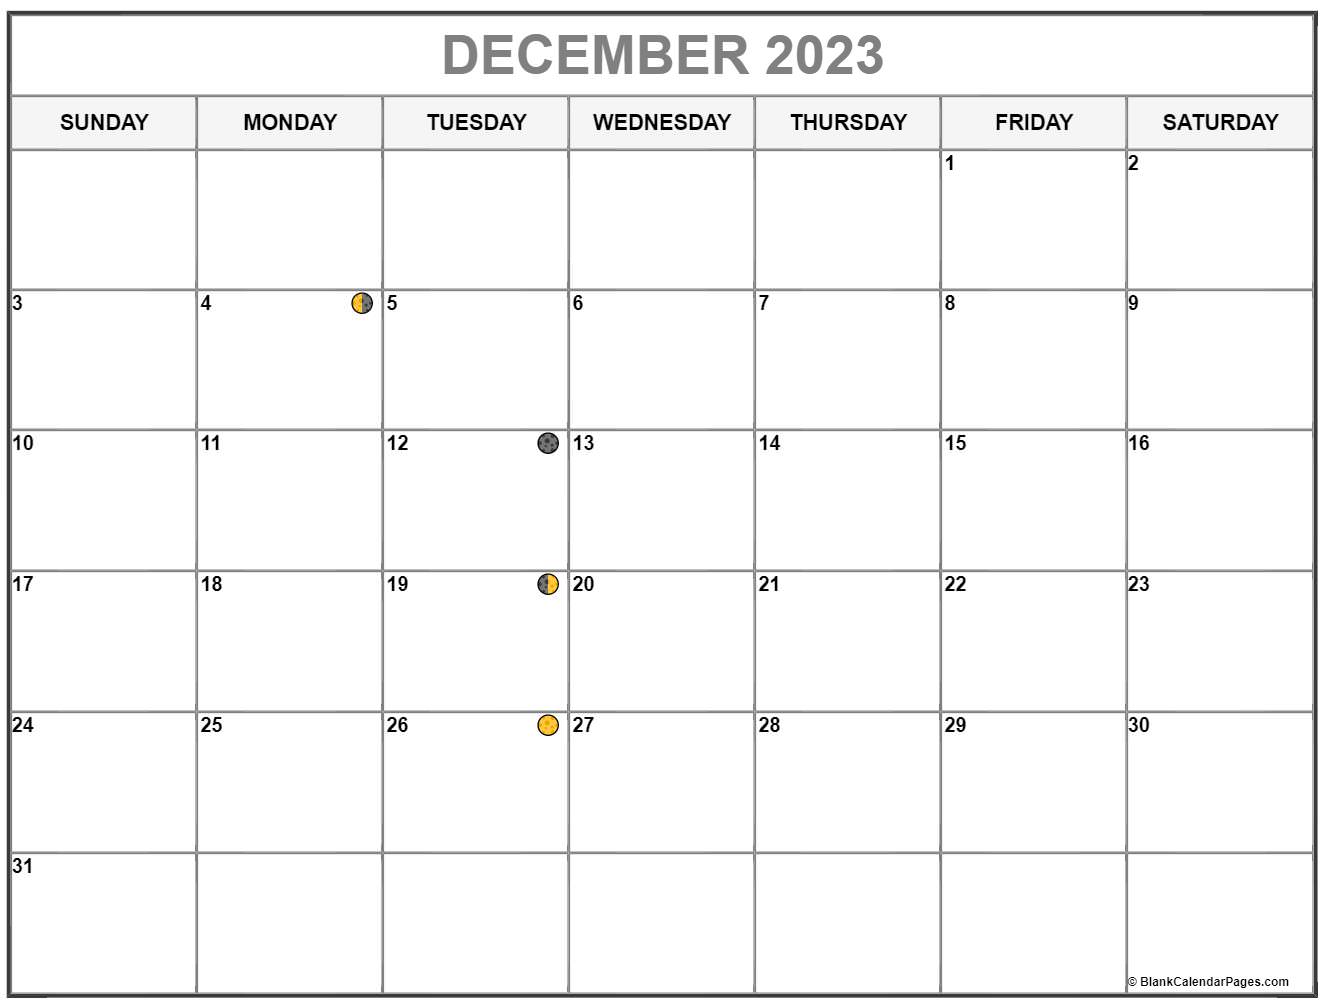 december 2023 Lunar Calendar Moon Phase Calendar